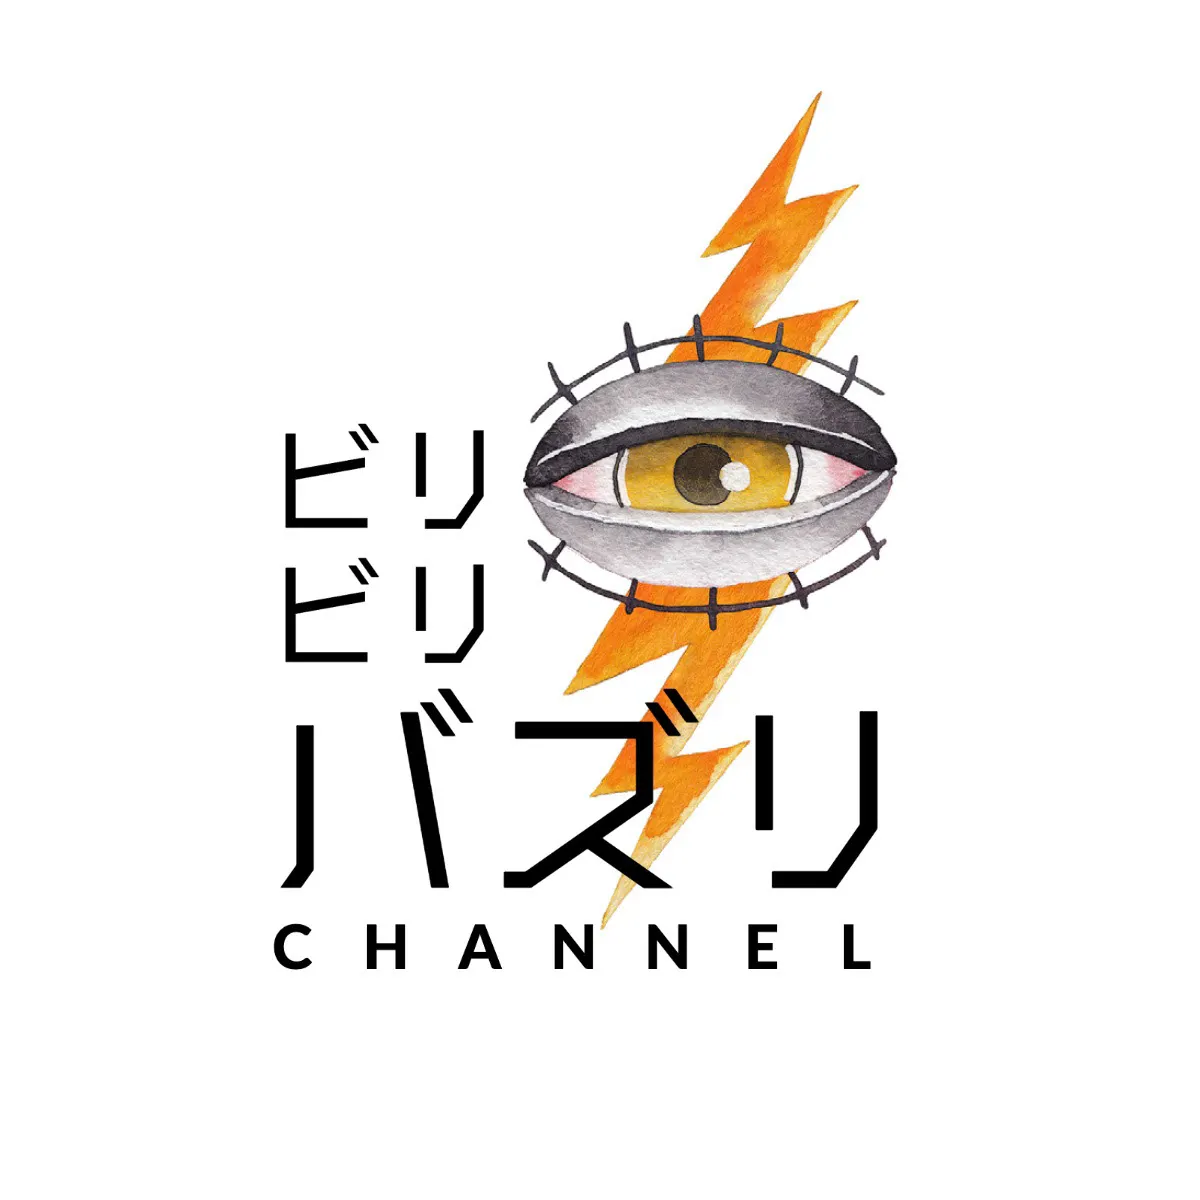 Buzz channel YouTube logo 